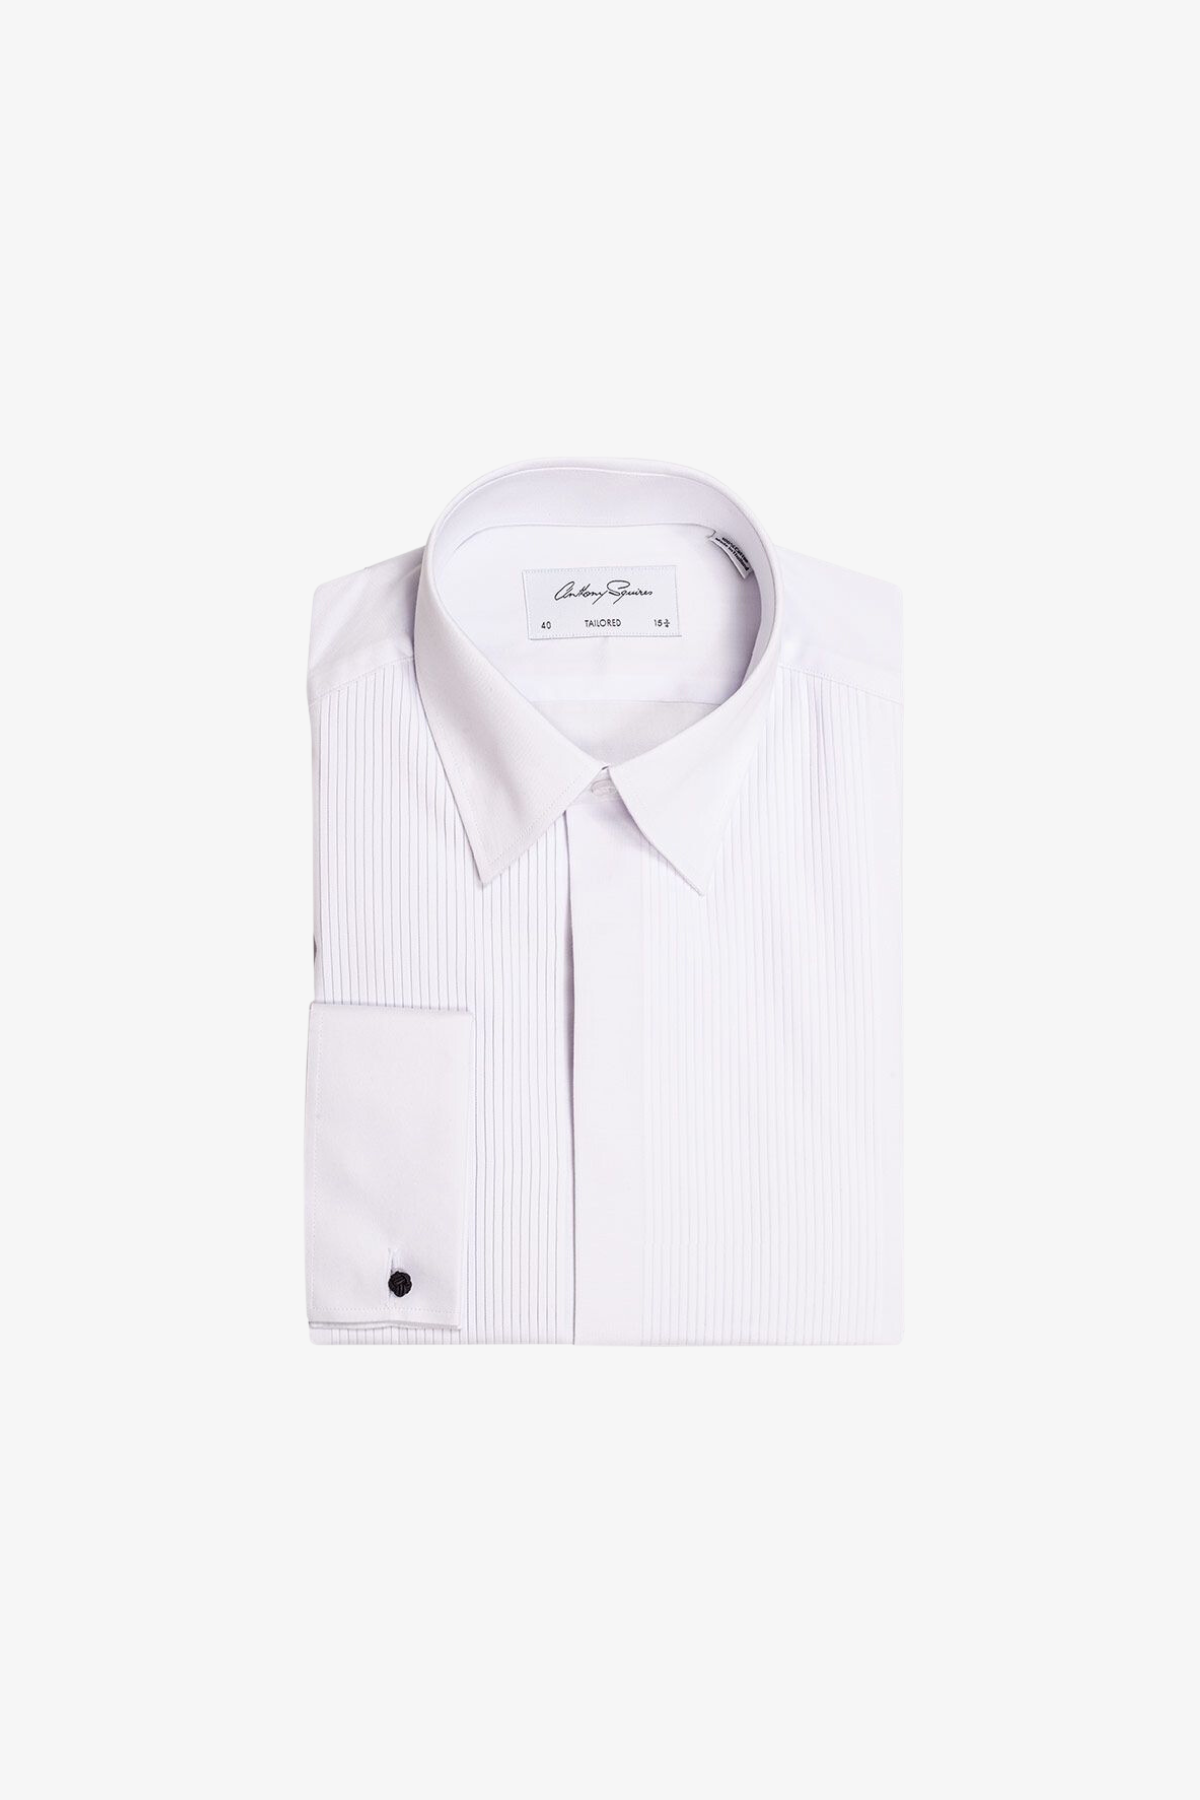 Clarence - White Dress Shirt